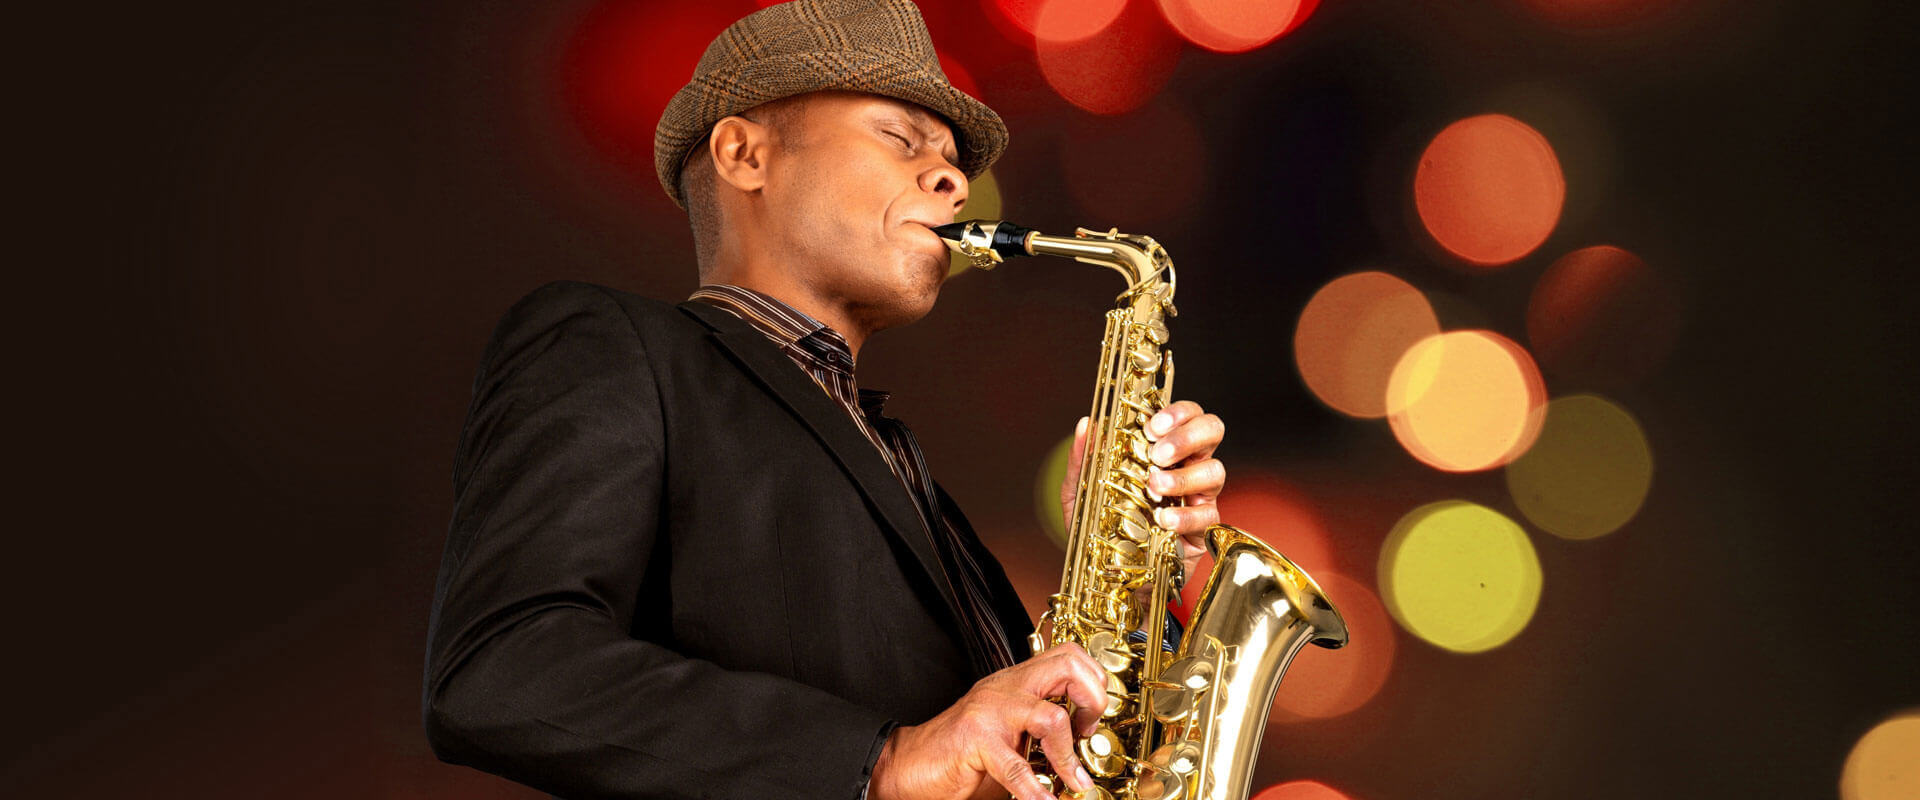 Saxophone Lessons Rosemount, MN